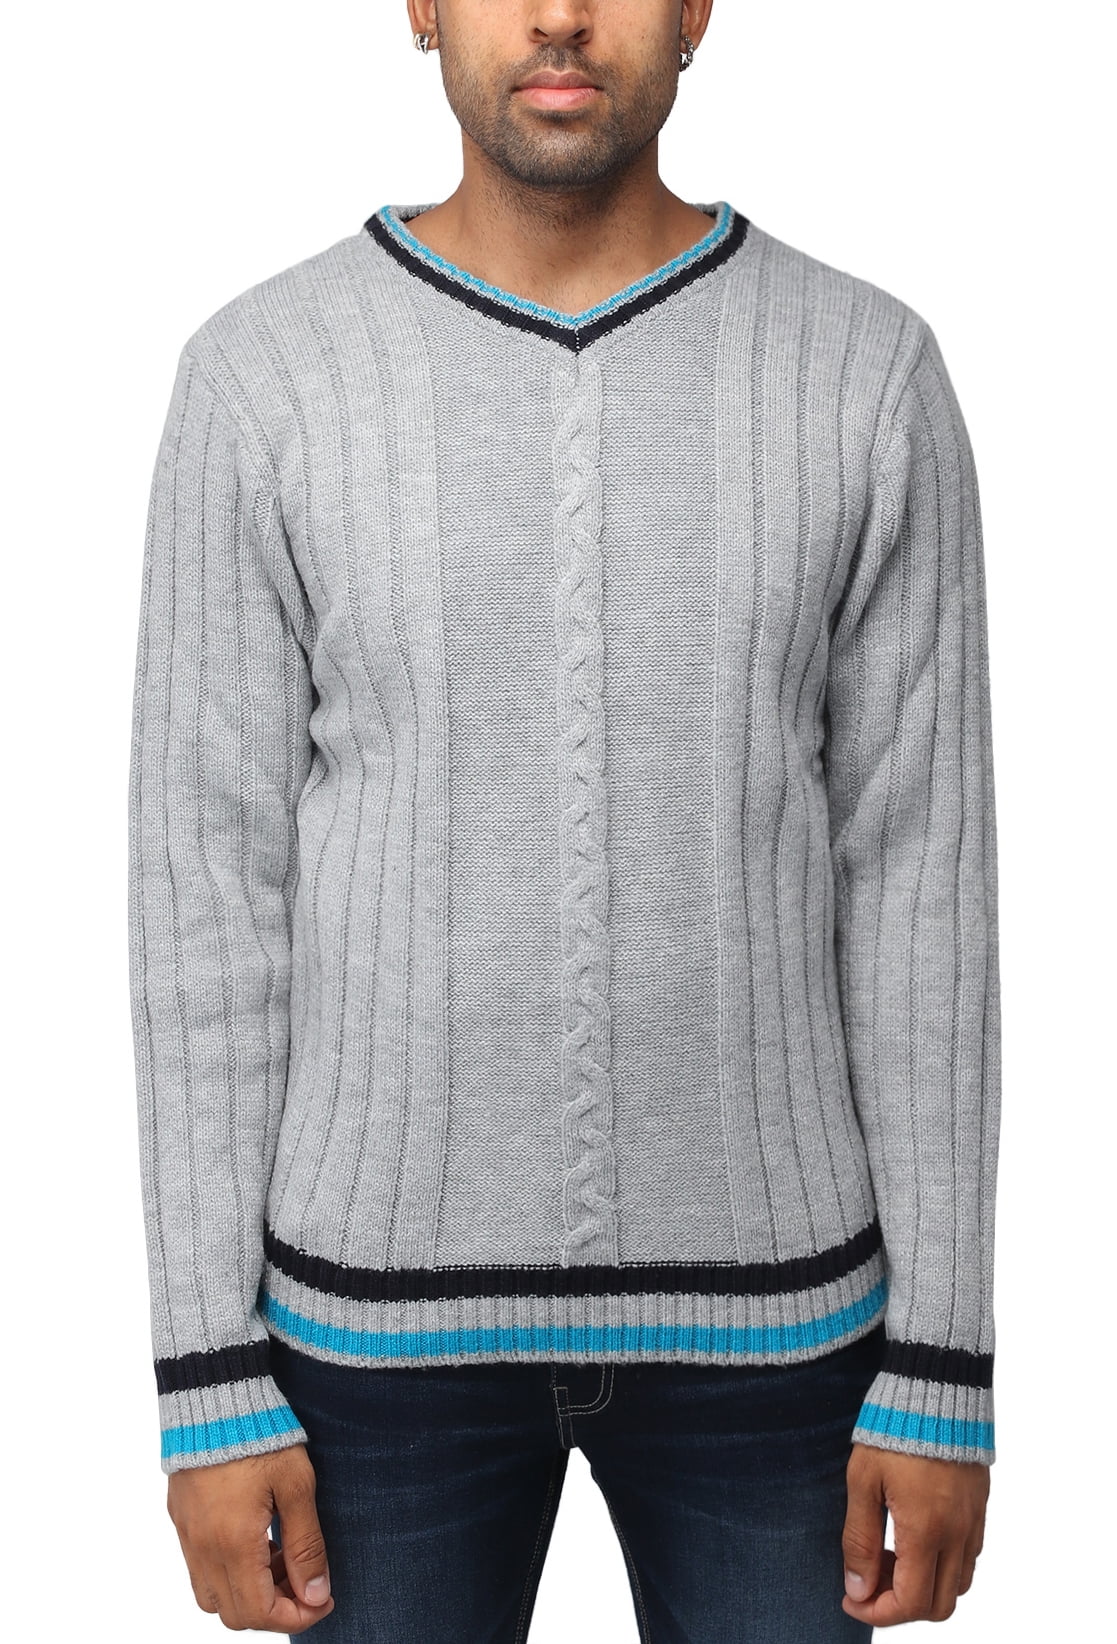 BOBOYOYO Boys Sweaters Vest,100% Cotton Cable Knits for Size 3-14 Years Boys Girls School Uniform 